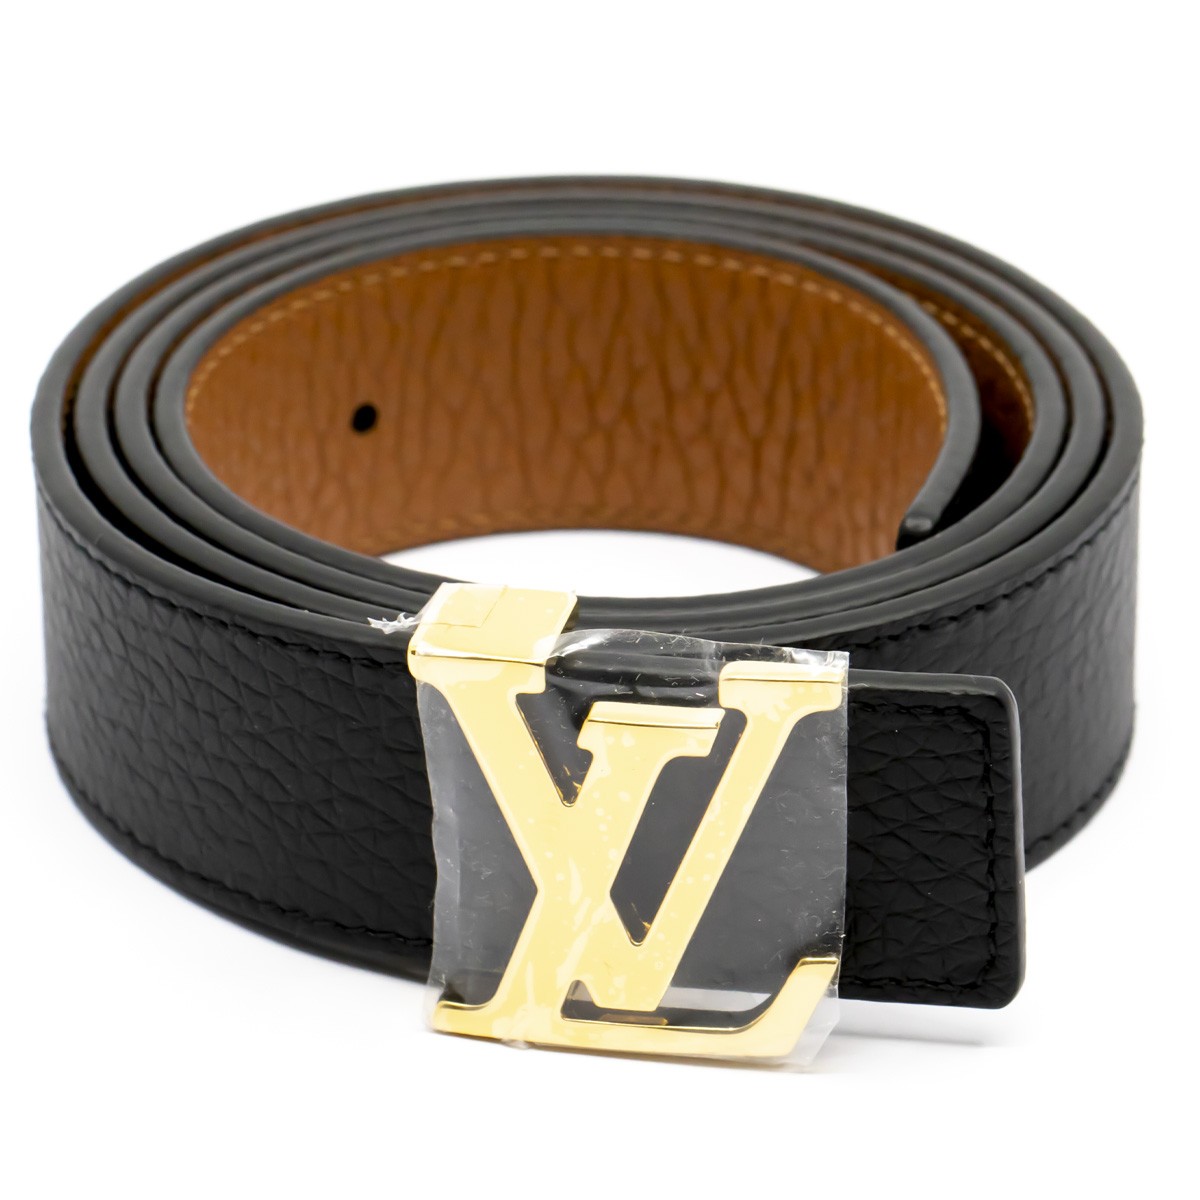 Louis Vuitton Reversible Ceinture Belt Initial - Mastro Luxe